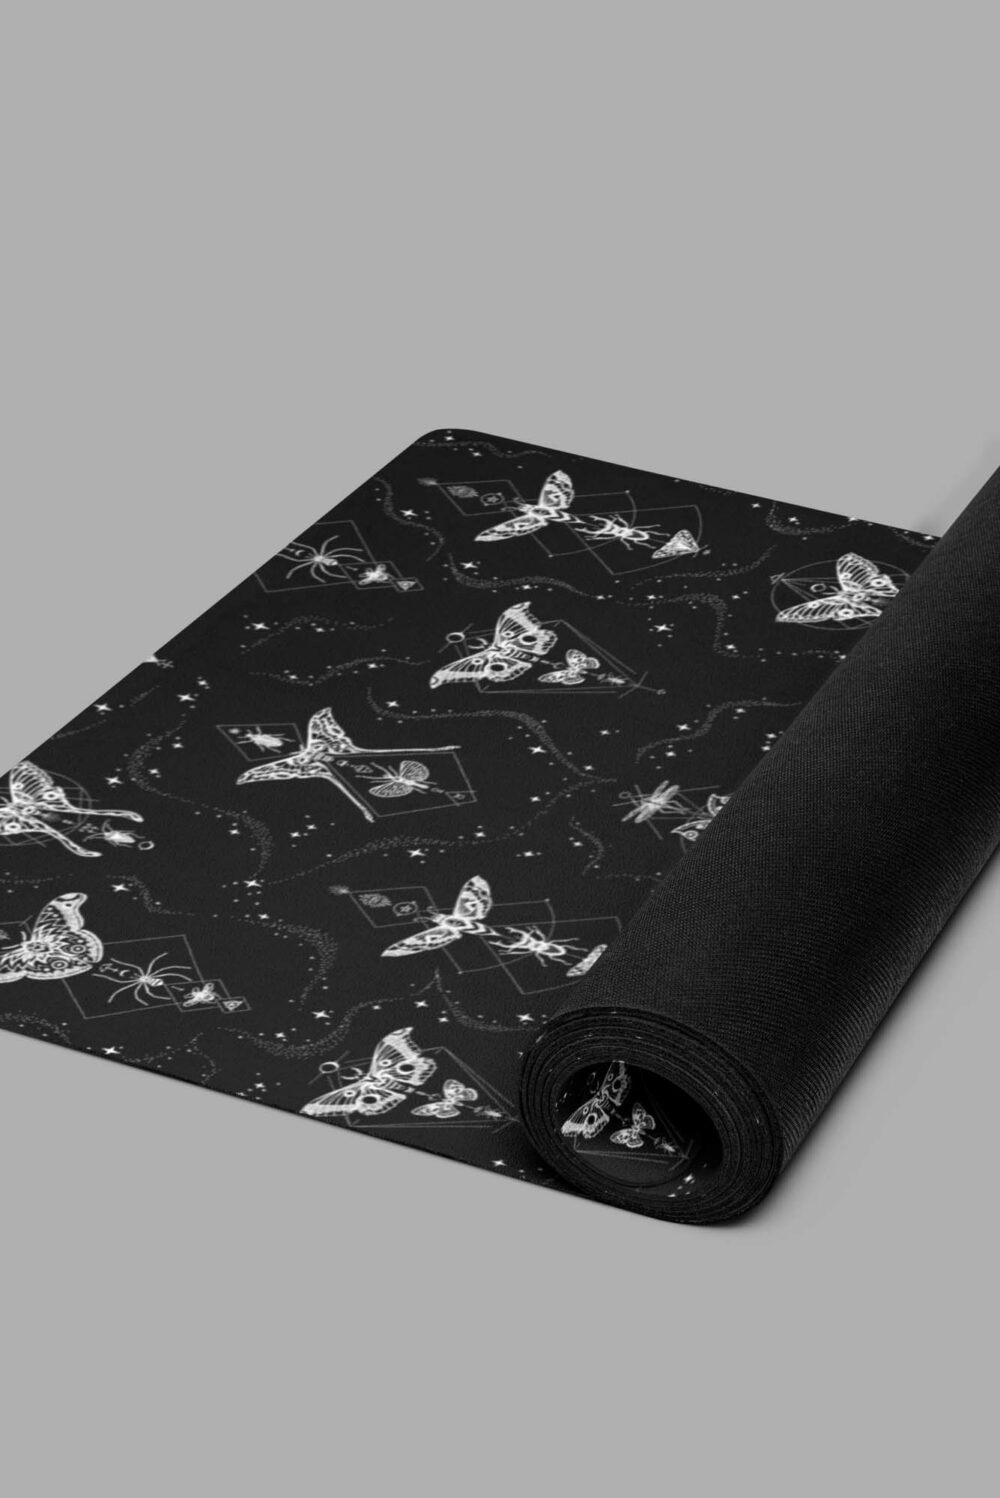 cosmic drifters entomon print yoga mat side